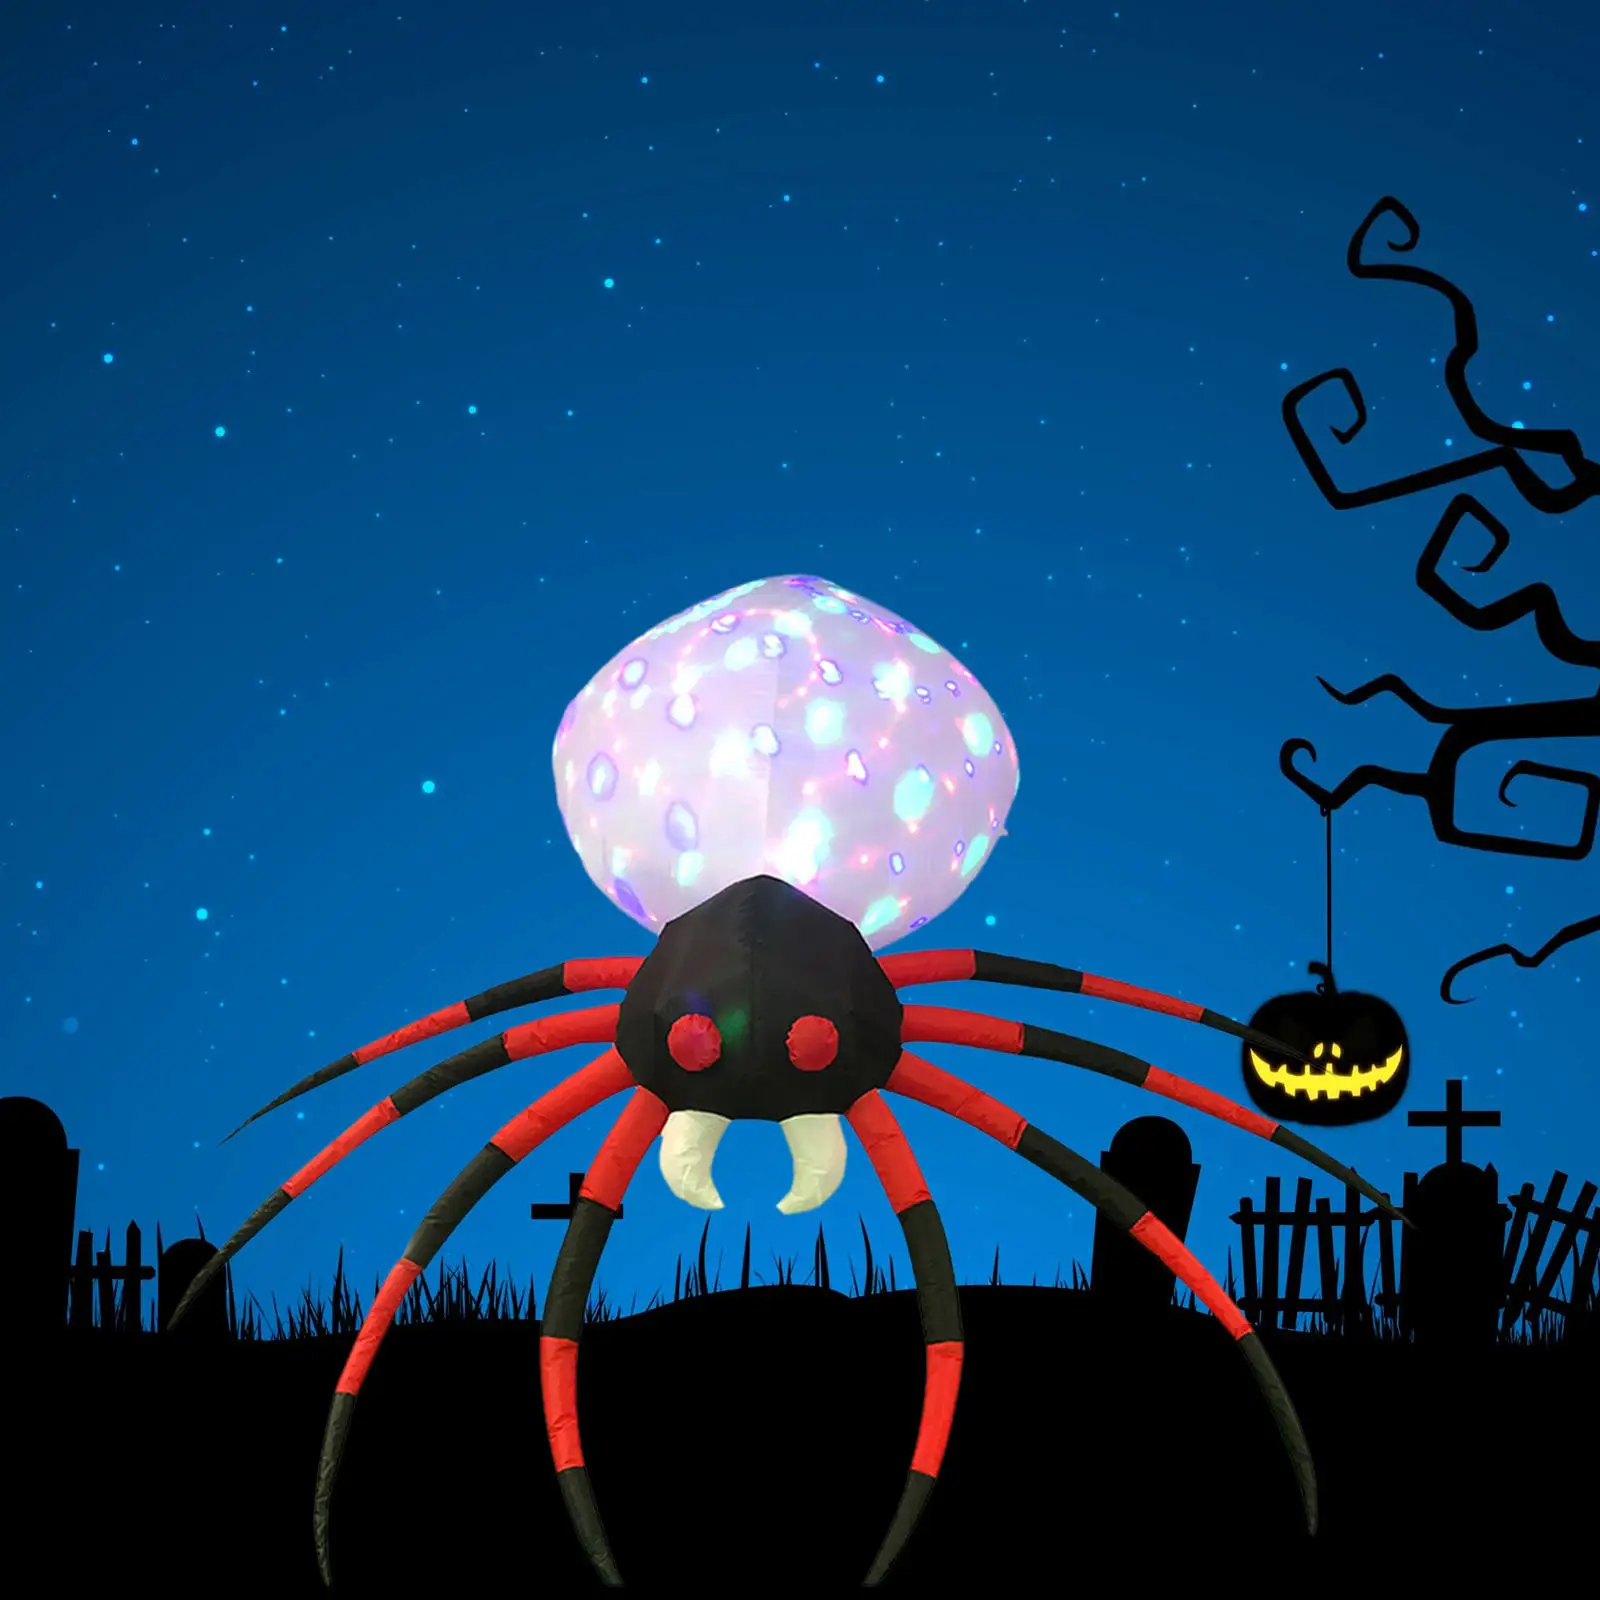 Giant Inflatable spider halloween animal backyard decoration, 2.4m 7.9ft black spider model balloon